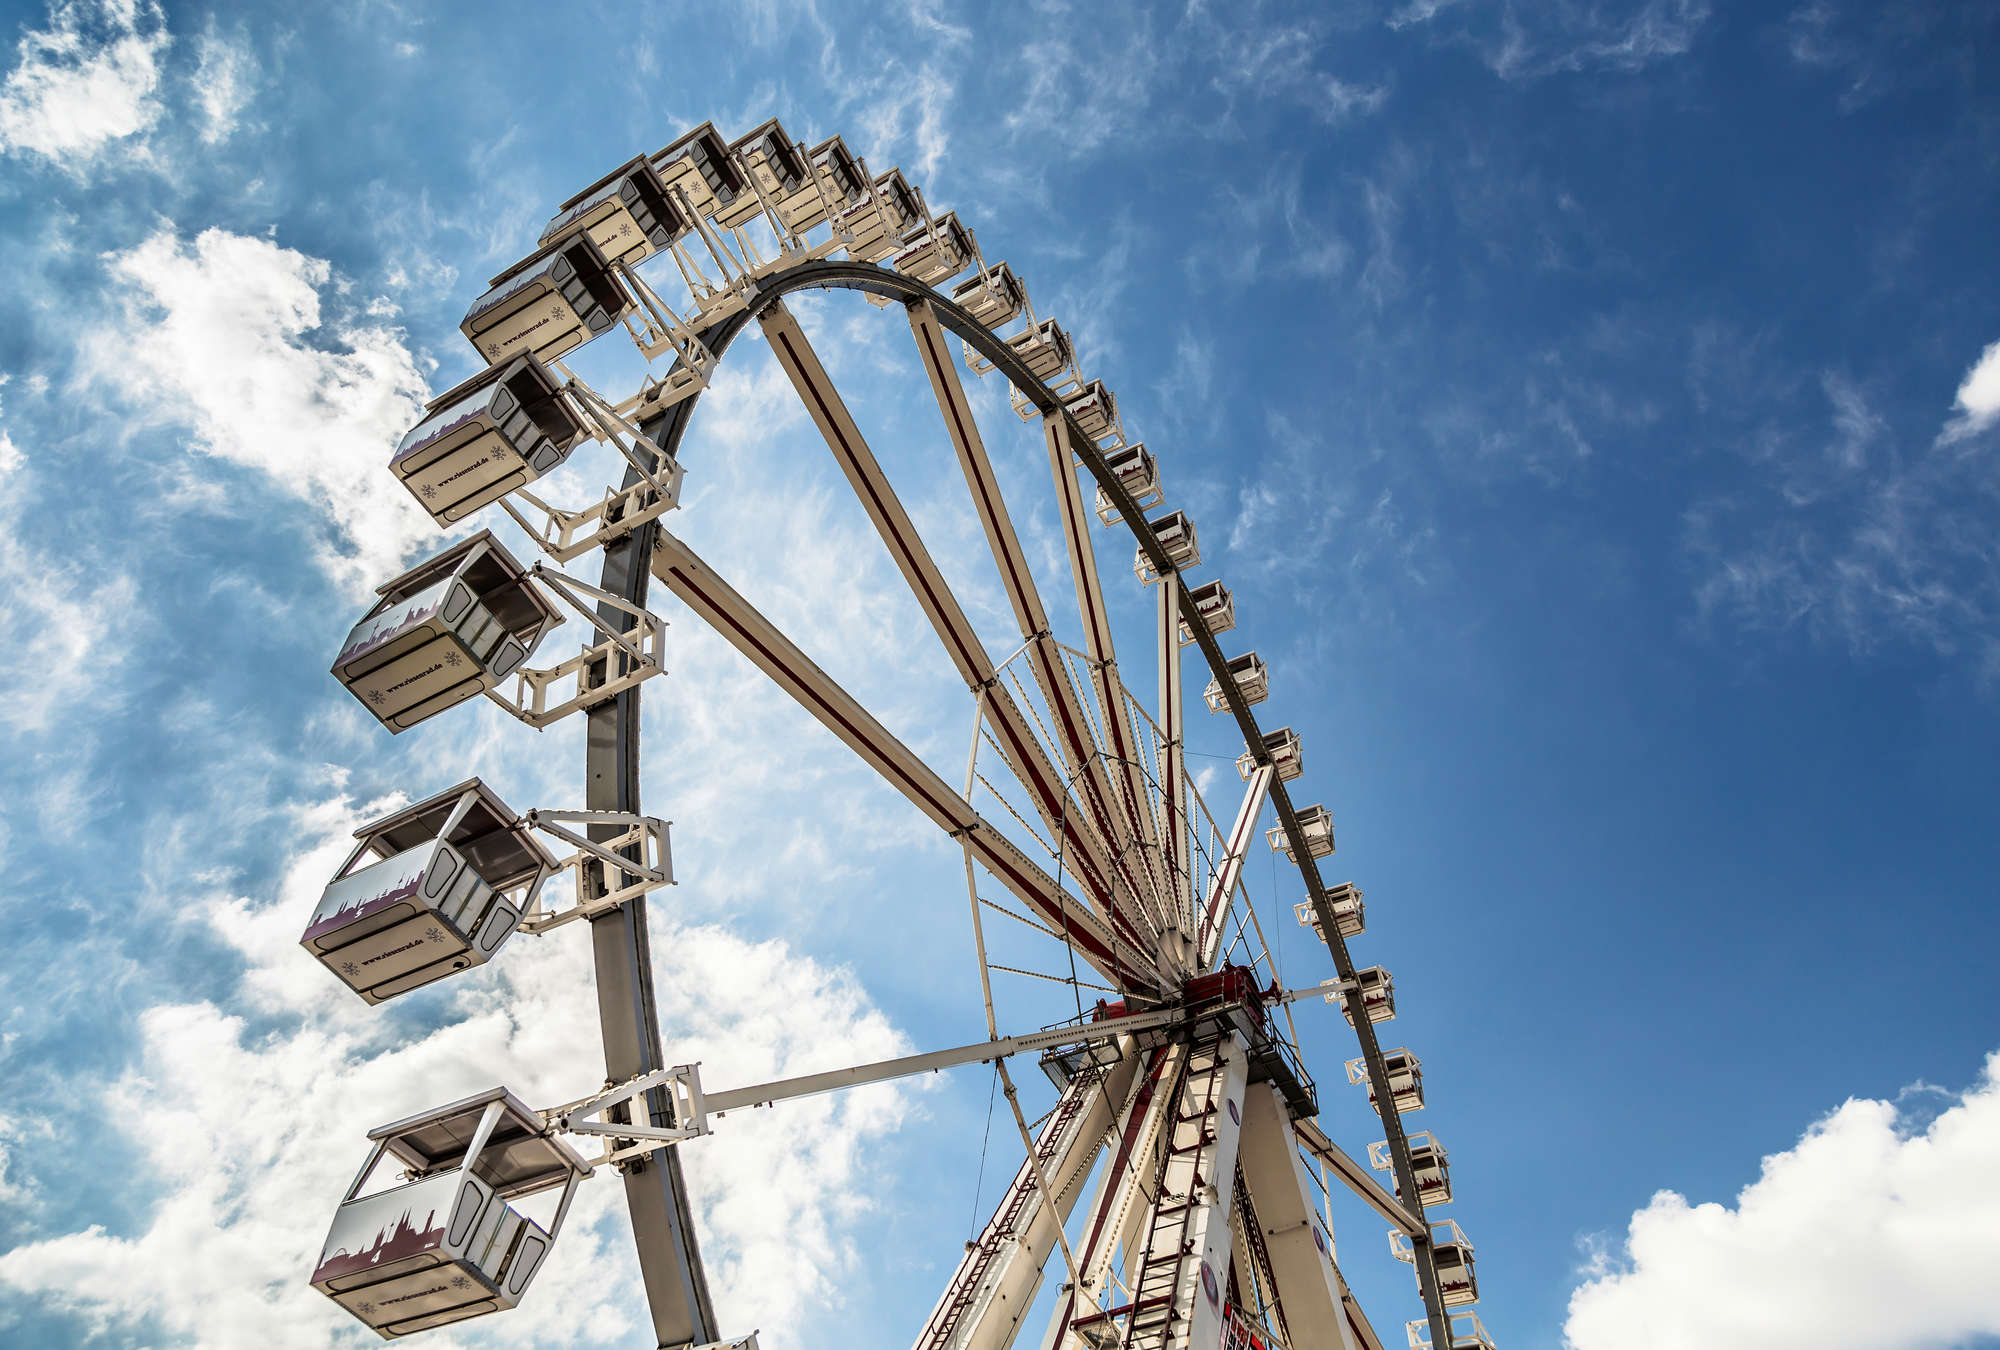             Photo wallpaper Ferris wheel - view of the sky
        